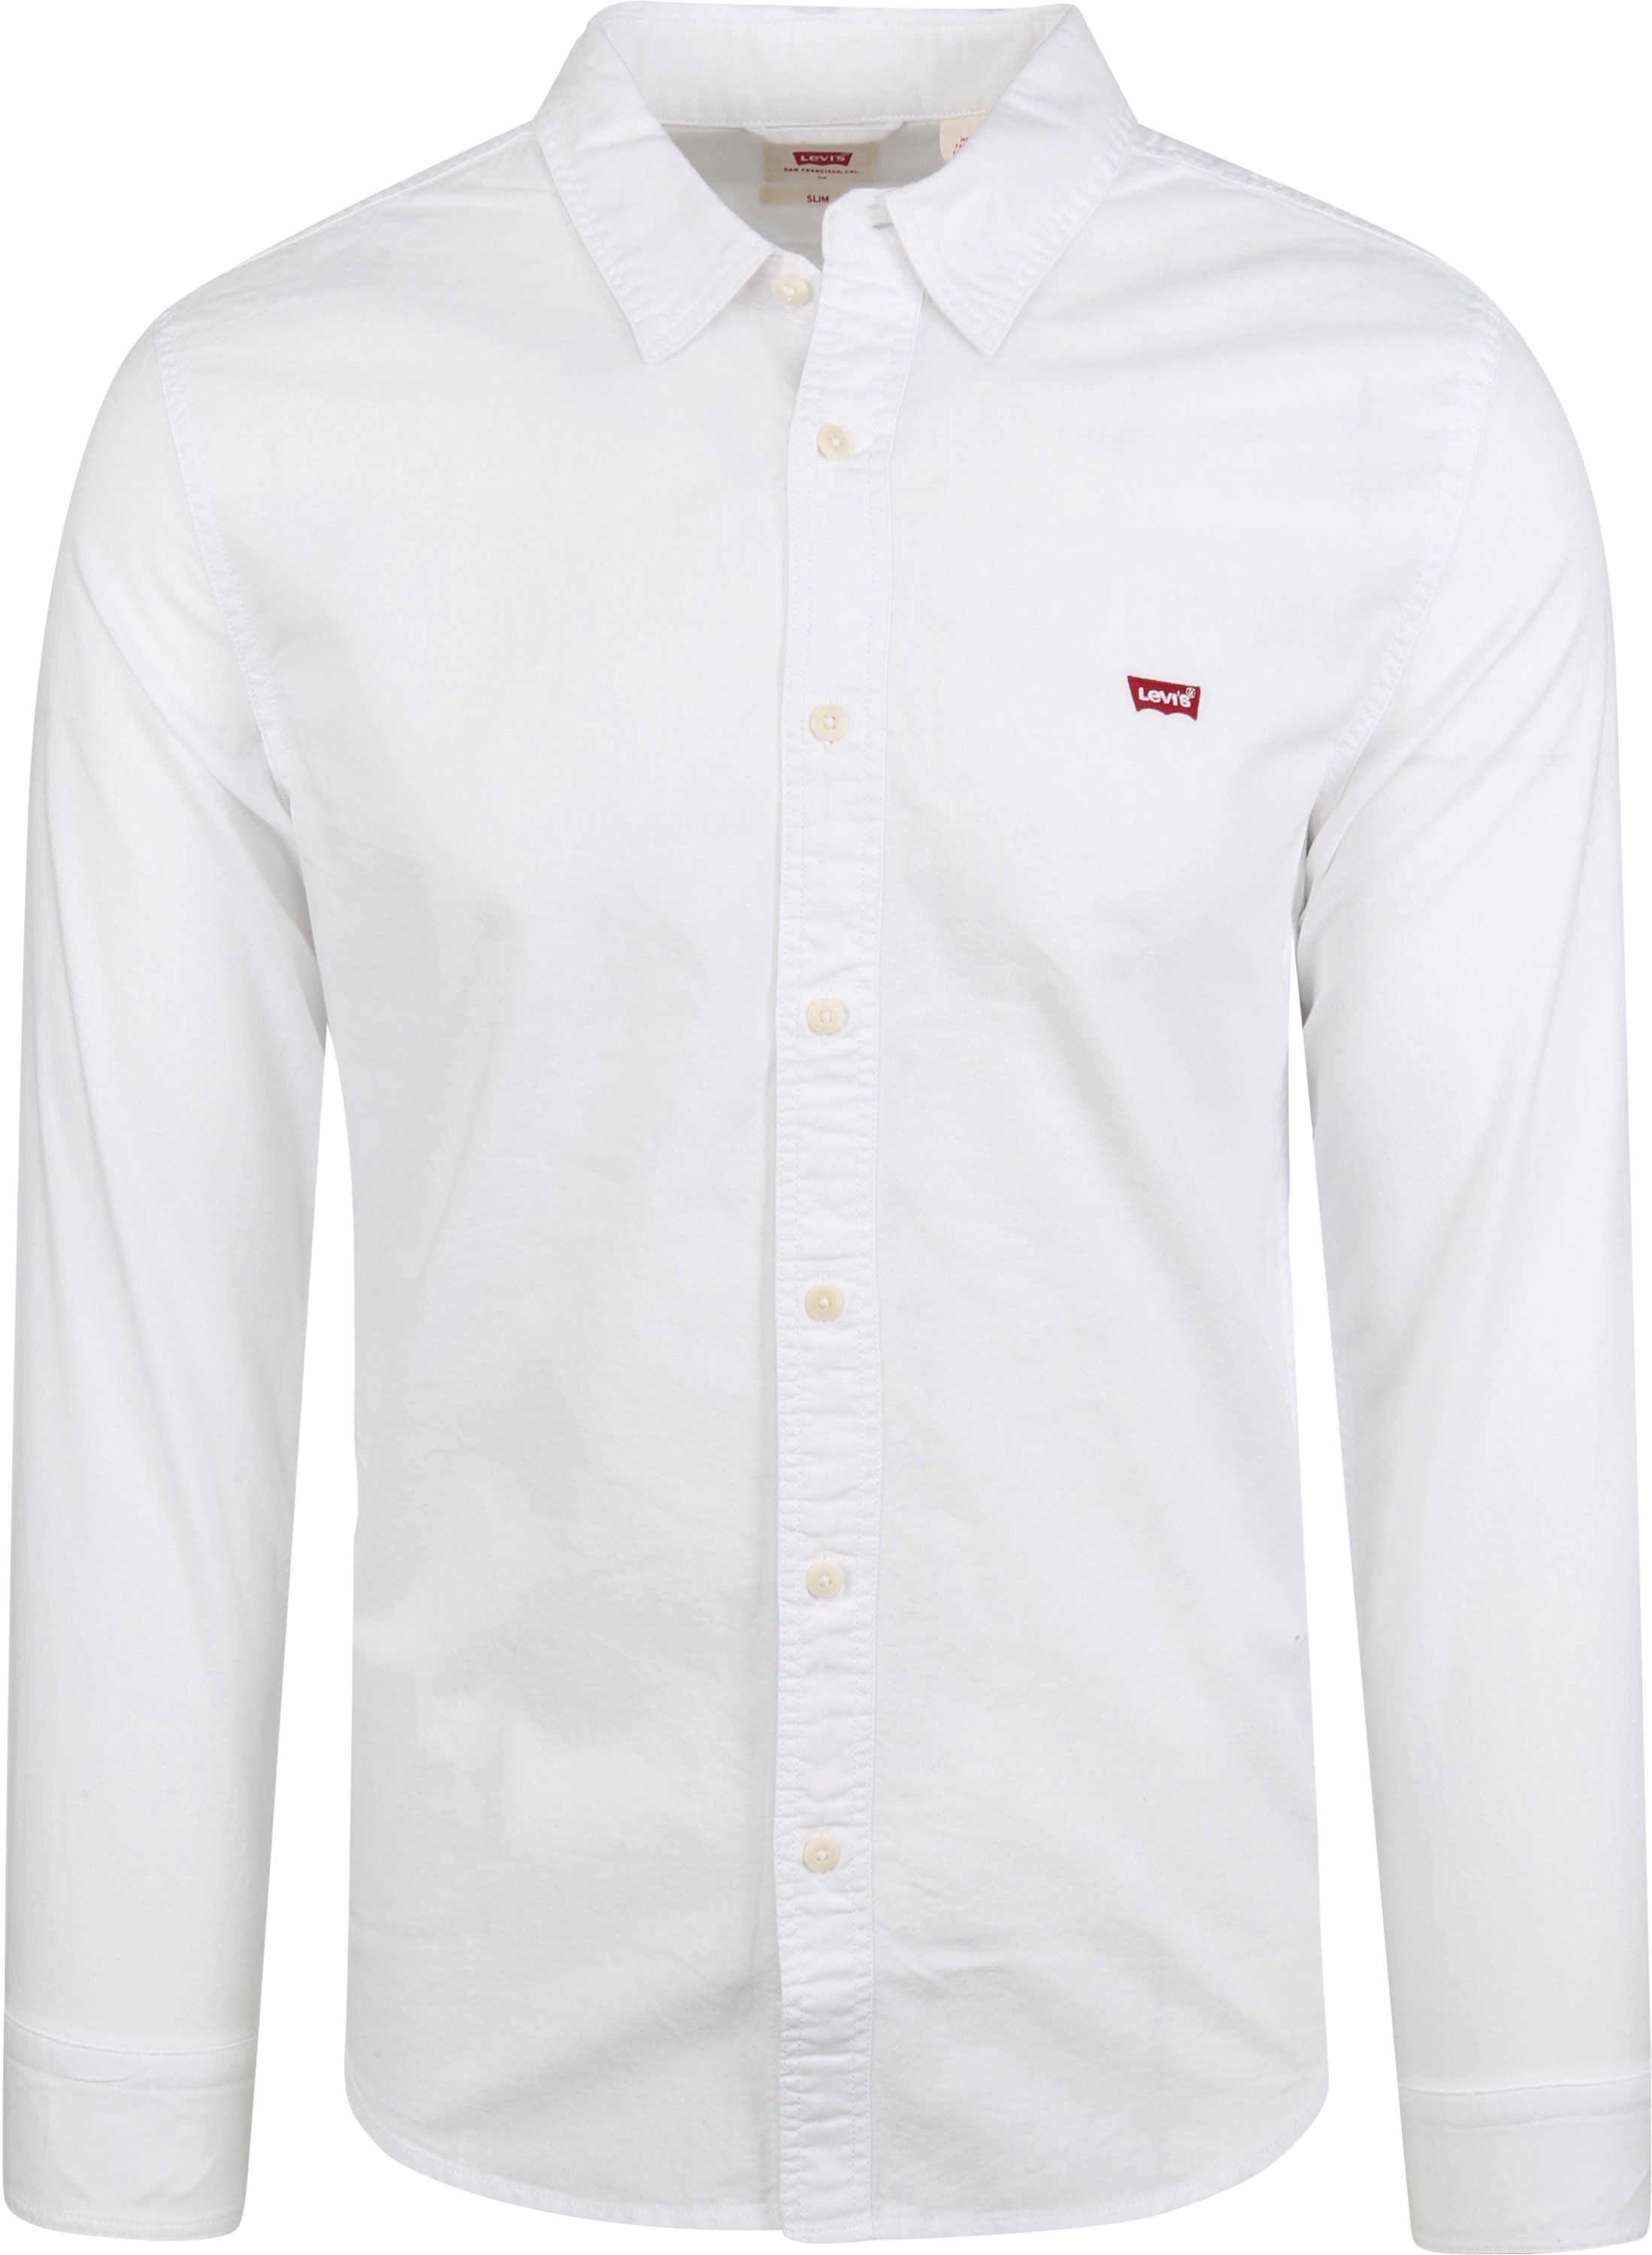 Levi's Battery Shirt White size L